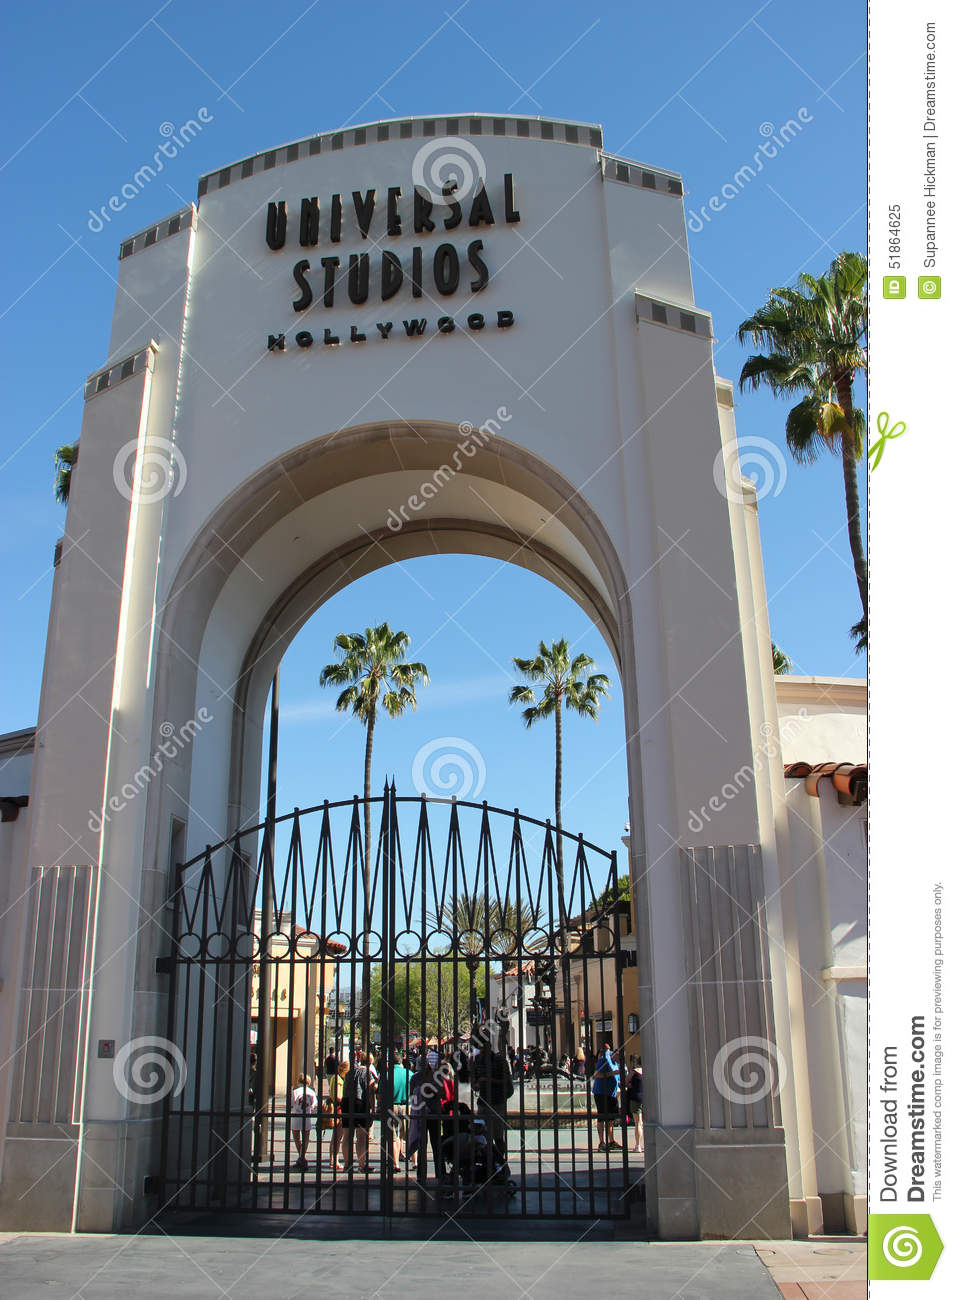 Universal Studios Hollywood Editorial Image   Image  51864625